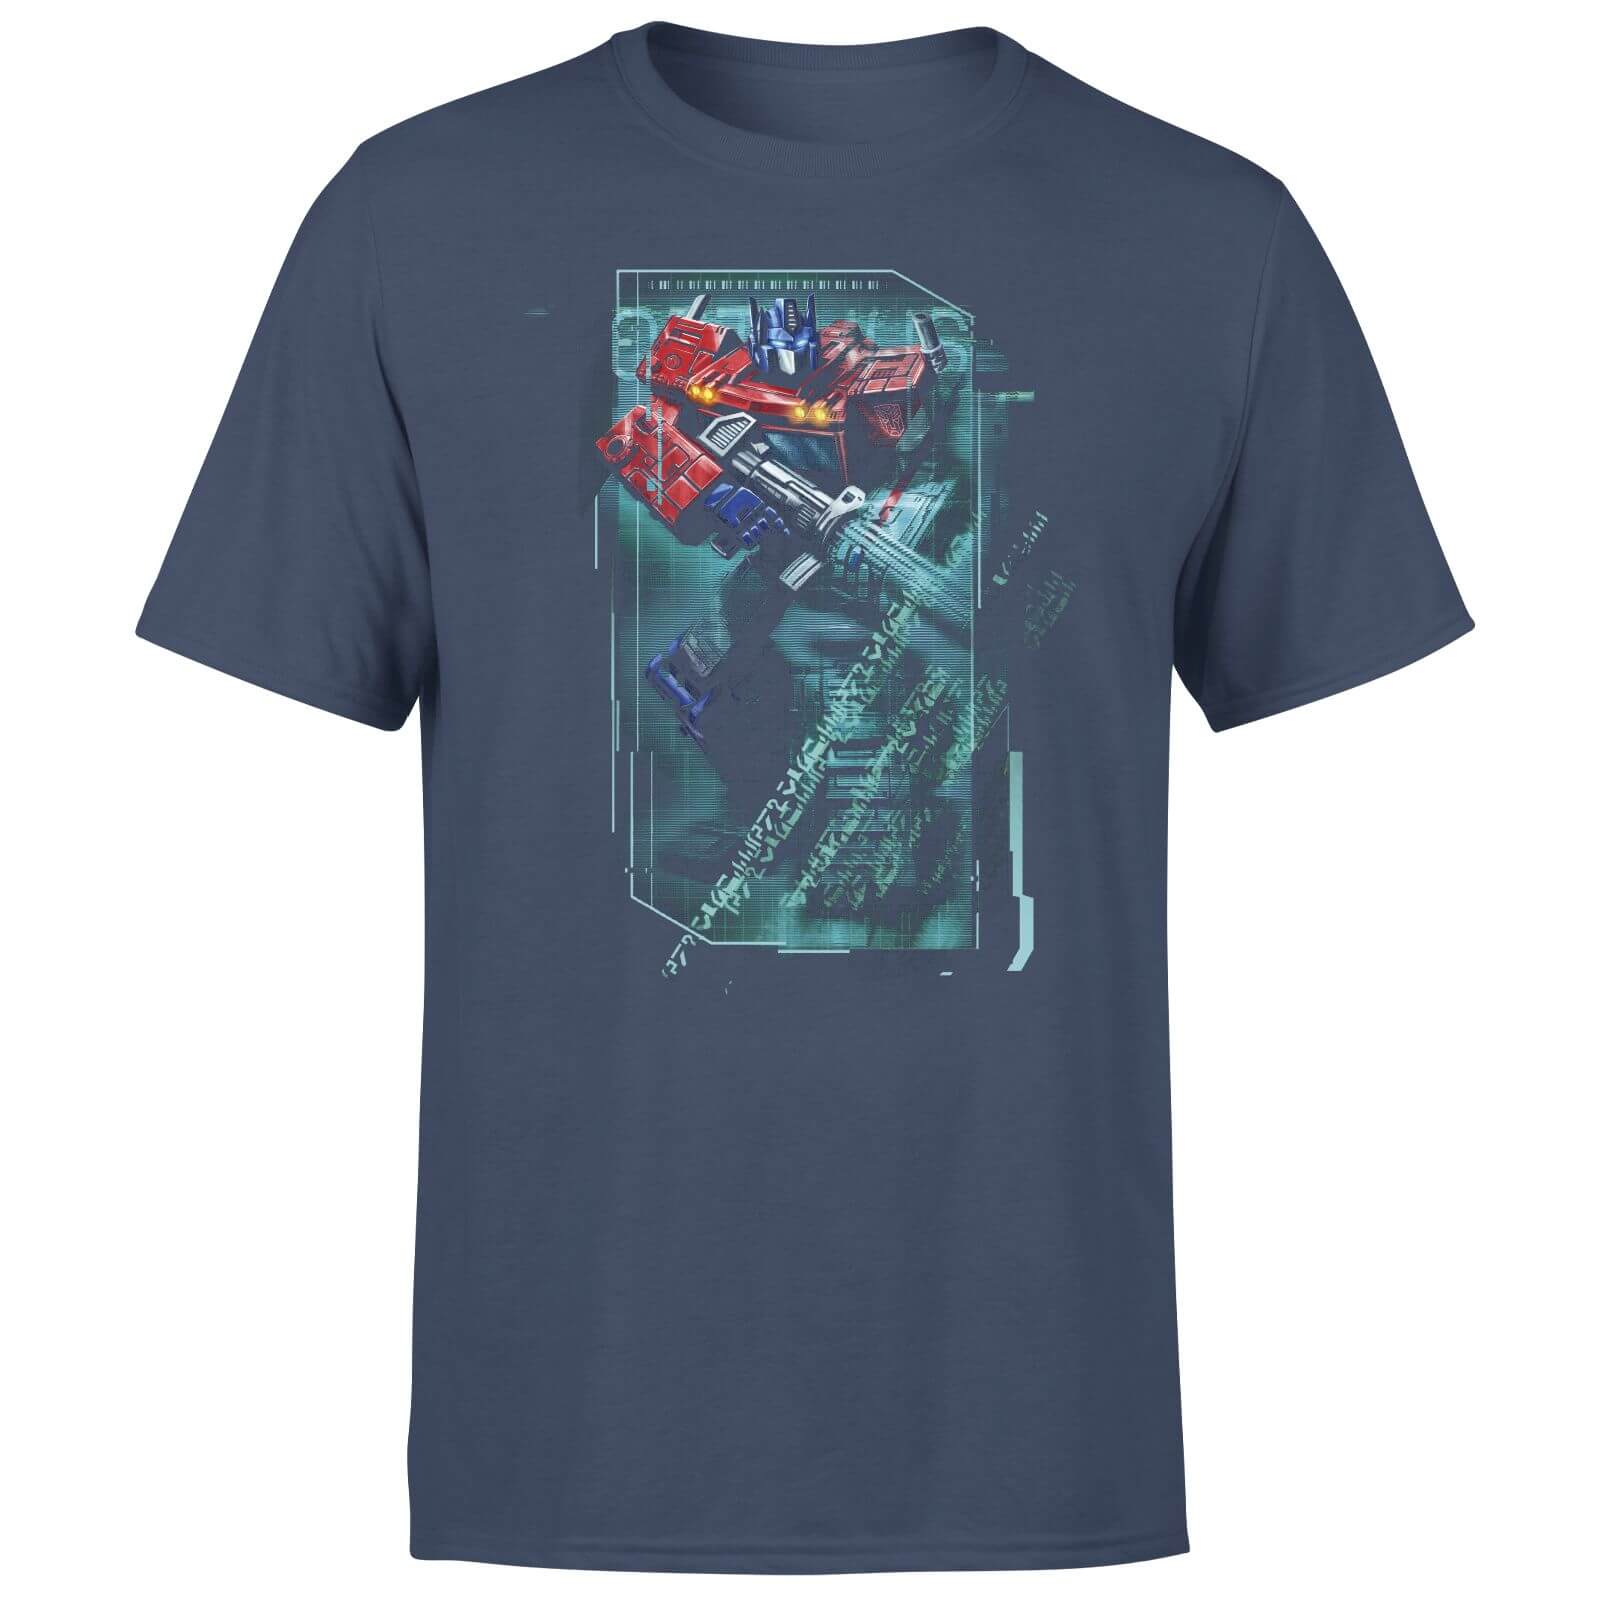 Transformers Optimus Prime Tech Unisex T-Shirt - Navy - L - Navy